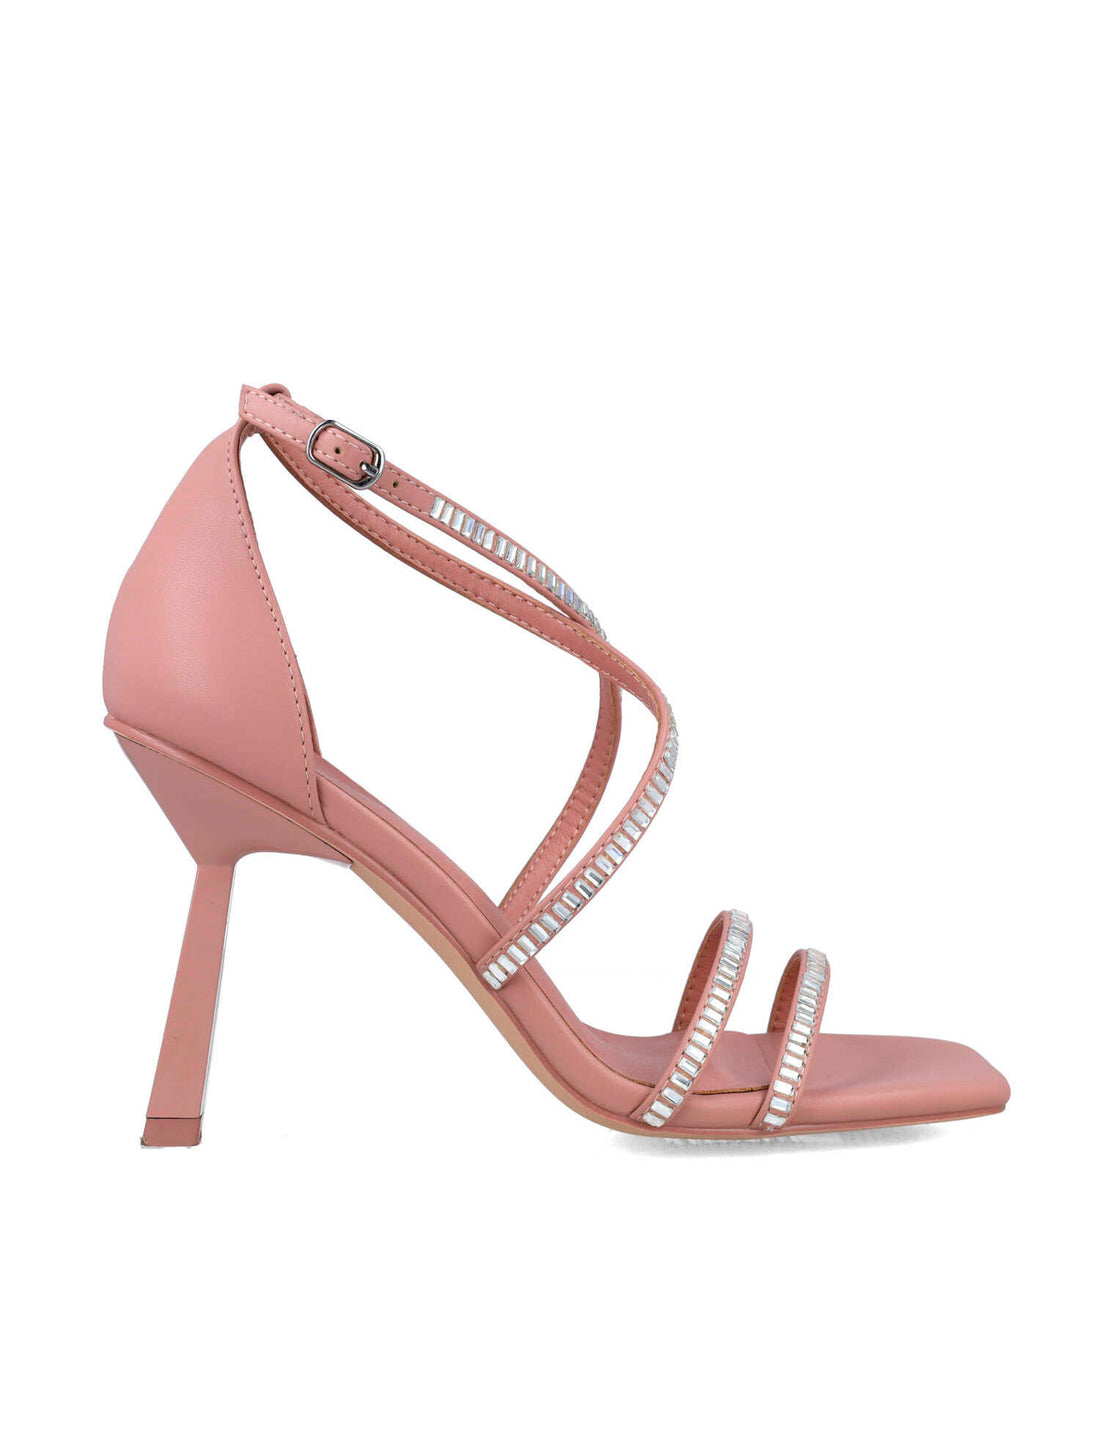 Pink High-Heel Sandals With Embellished Straps_24775_97_01